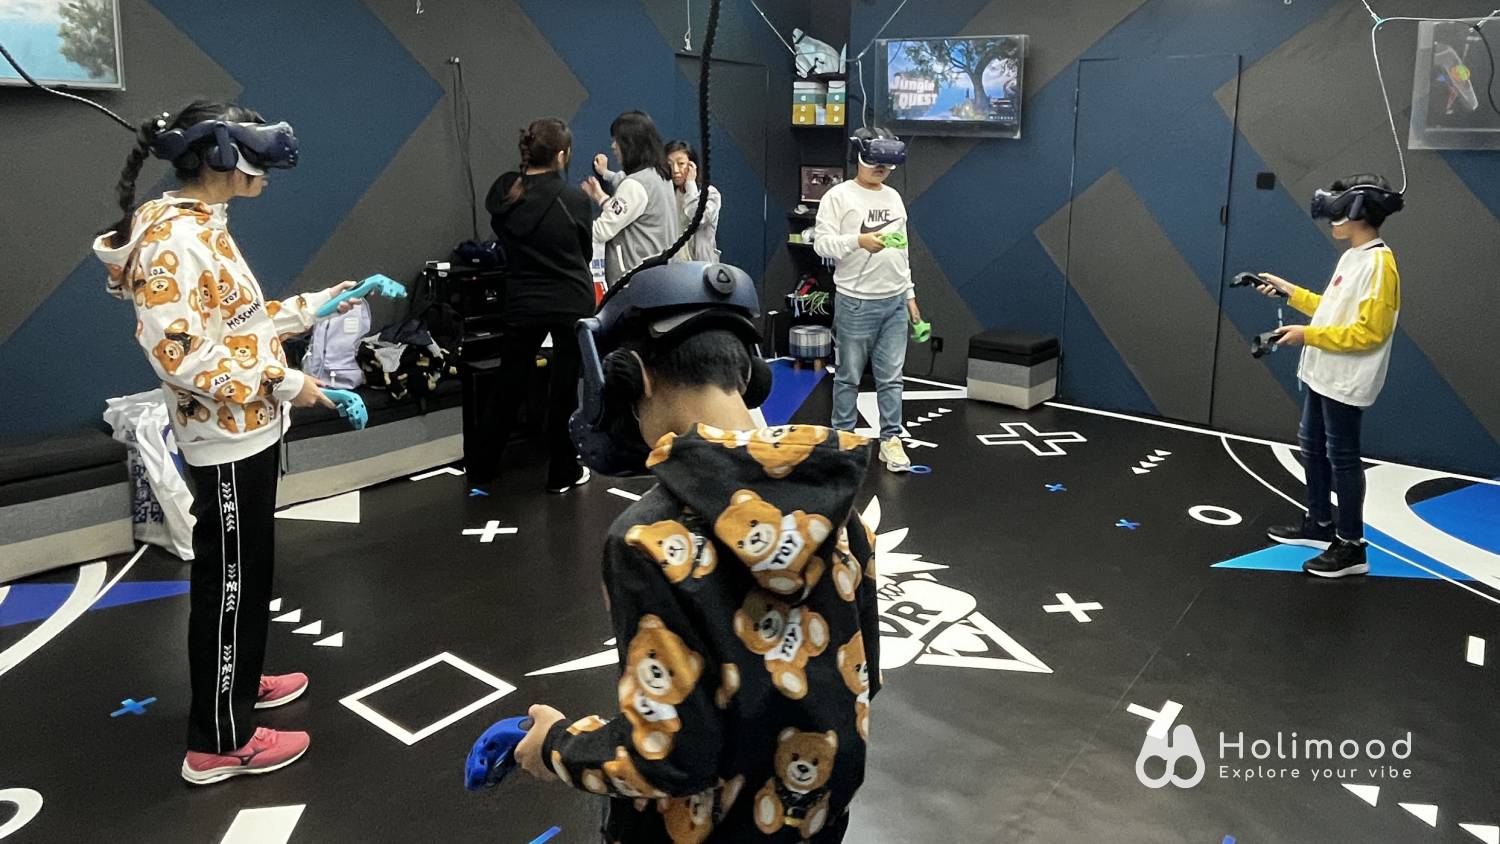 V-Owl Station VR Party 【最新解迷、恐怖主題】VR虛擬實境 90分鐘放題體驗 (另送4D動感太空艙體驗) 10